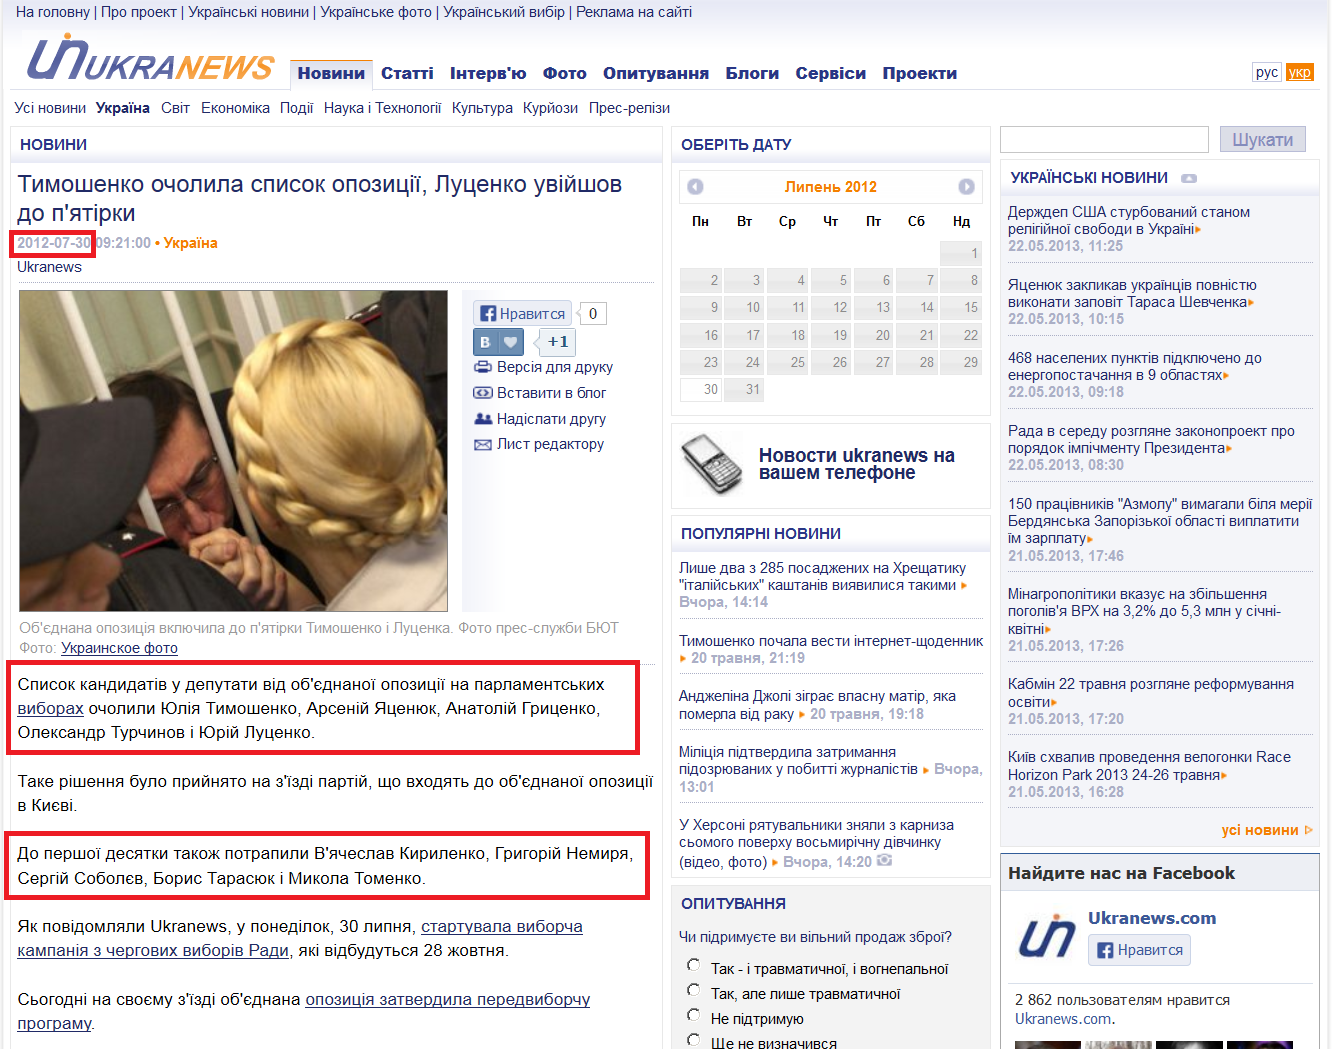 http://ukranews.com/uk/news/ukraine/2012/07/30/75743